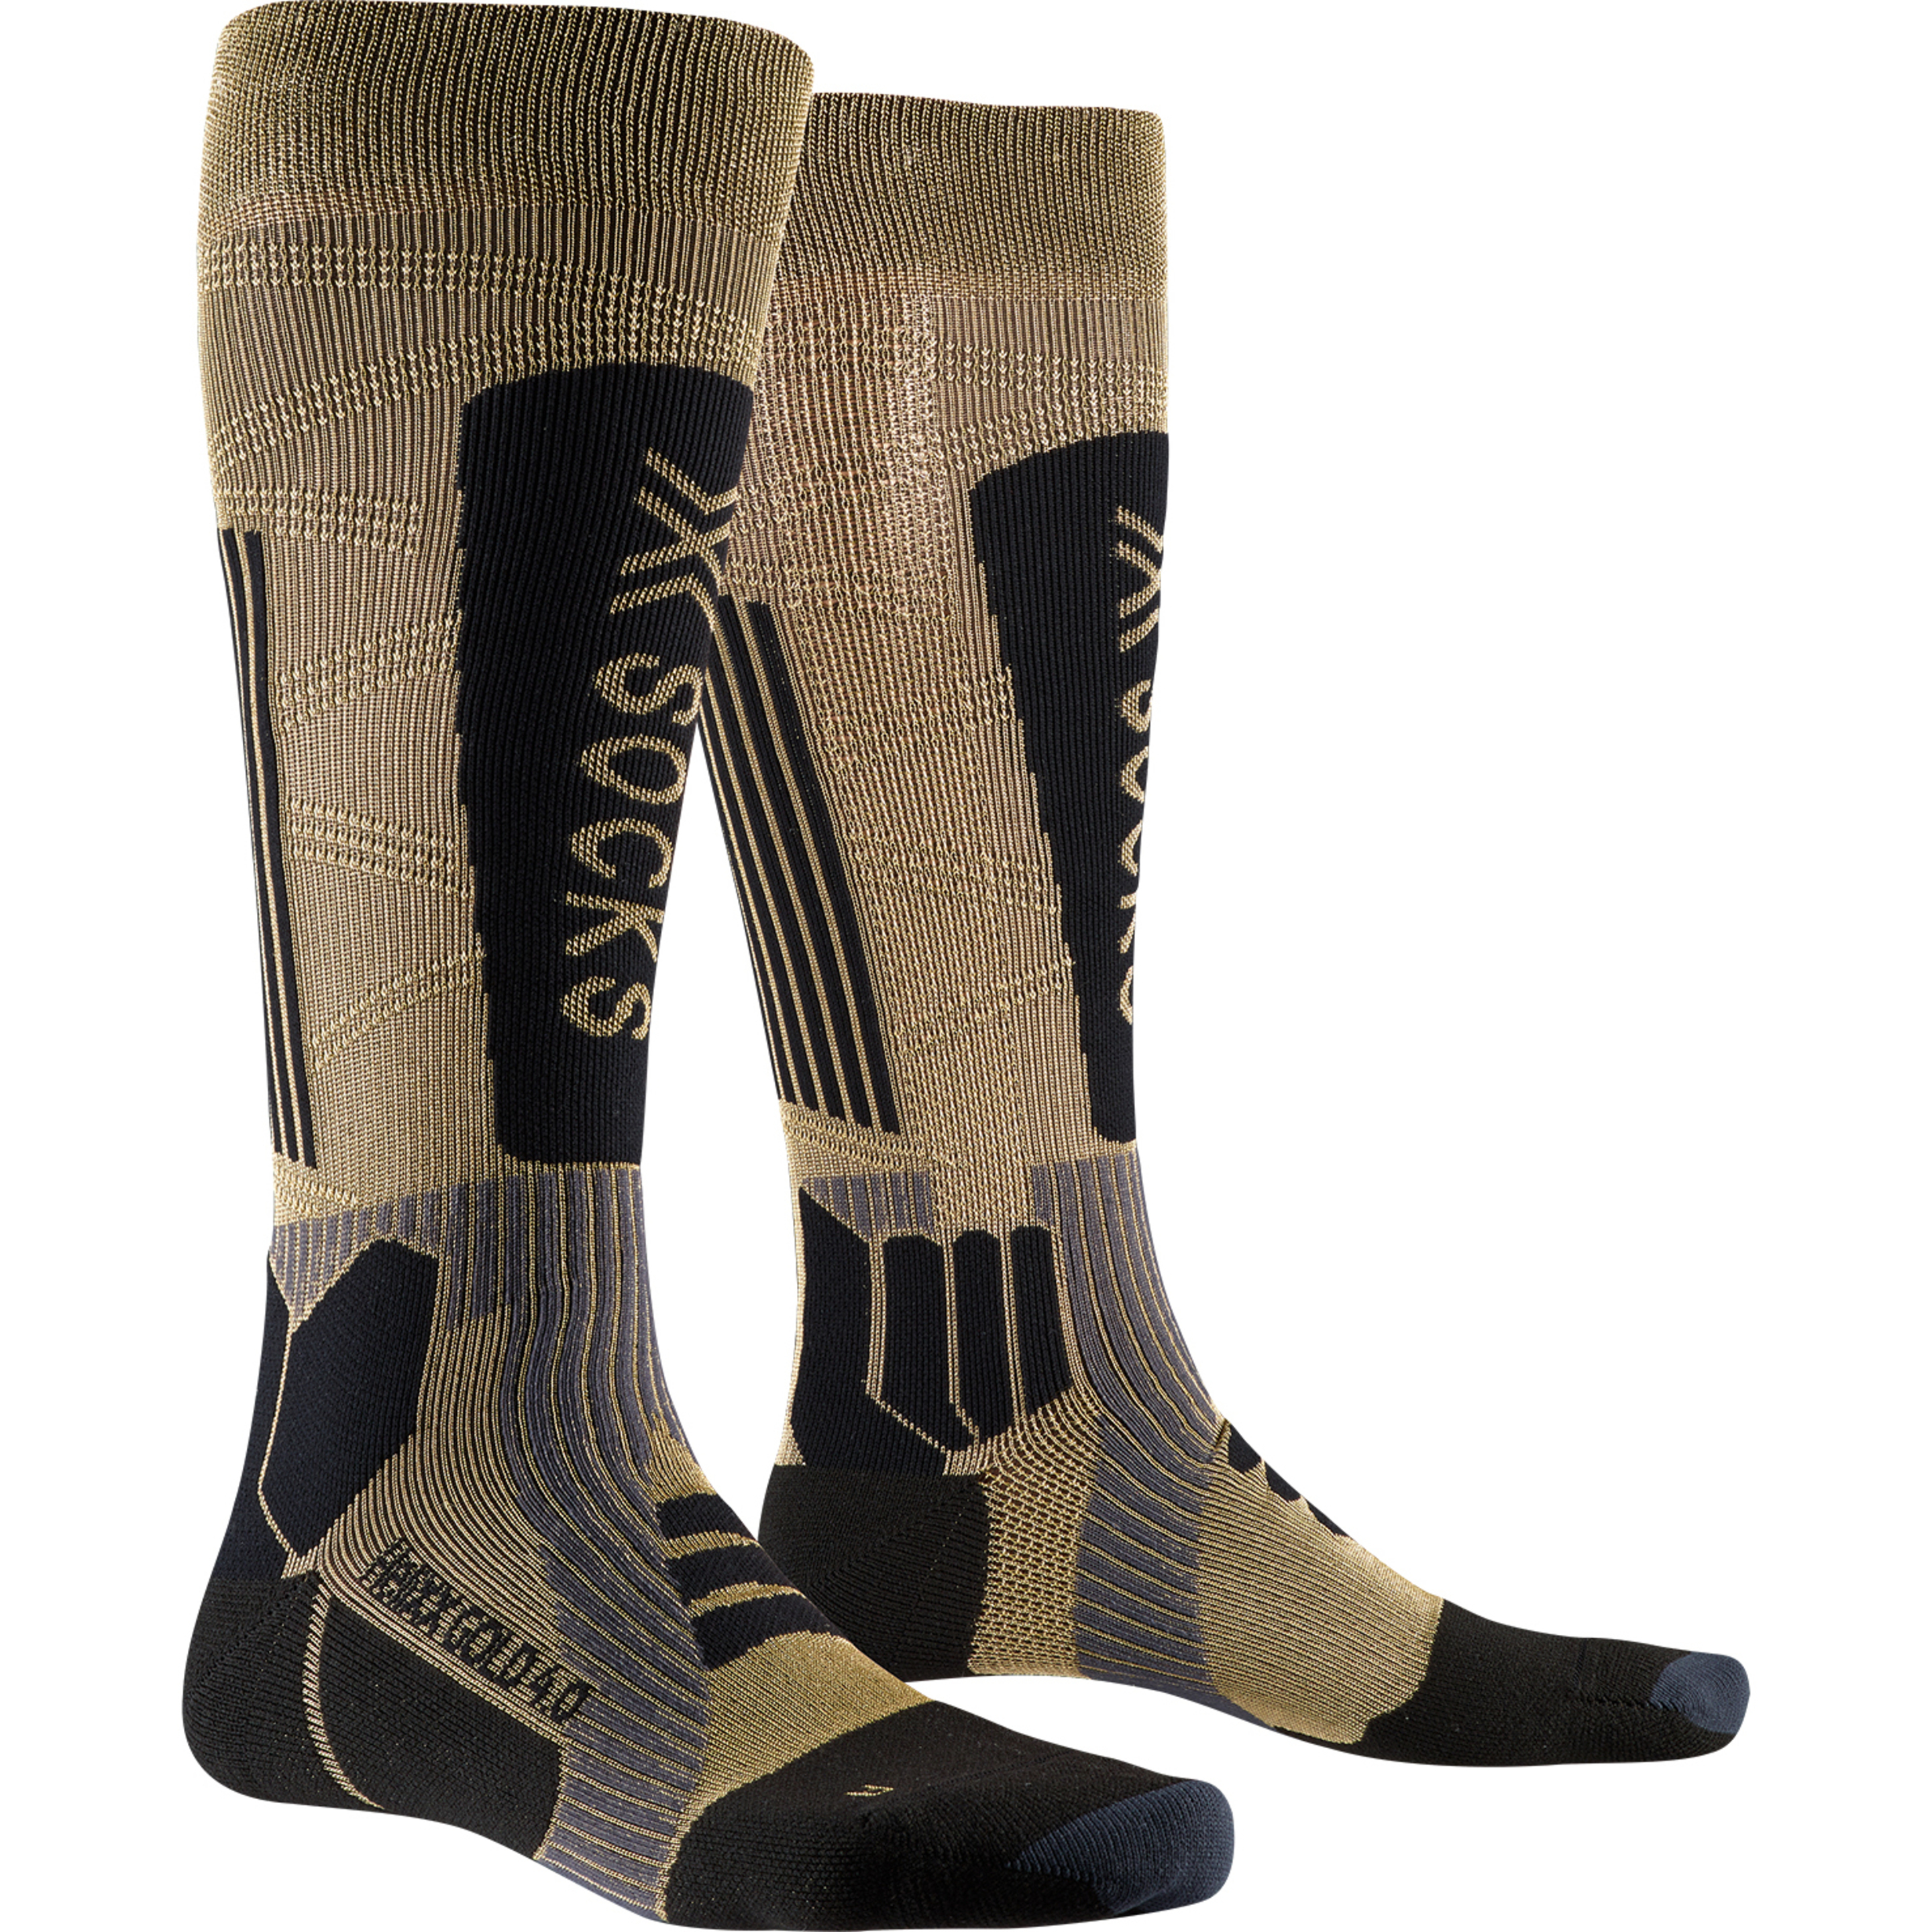 Calcetin Ski Helixx Gold 4.0  X-socks - Dorado  MKP